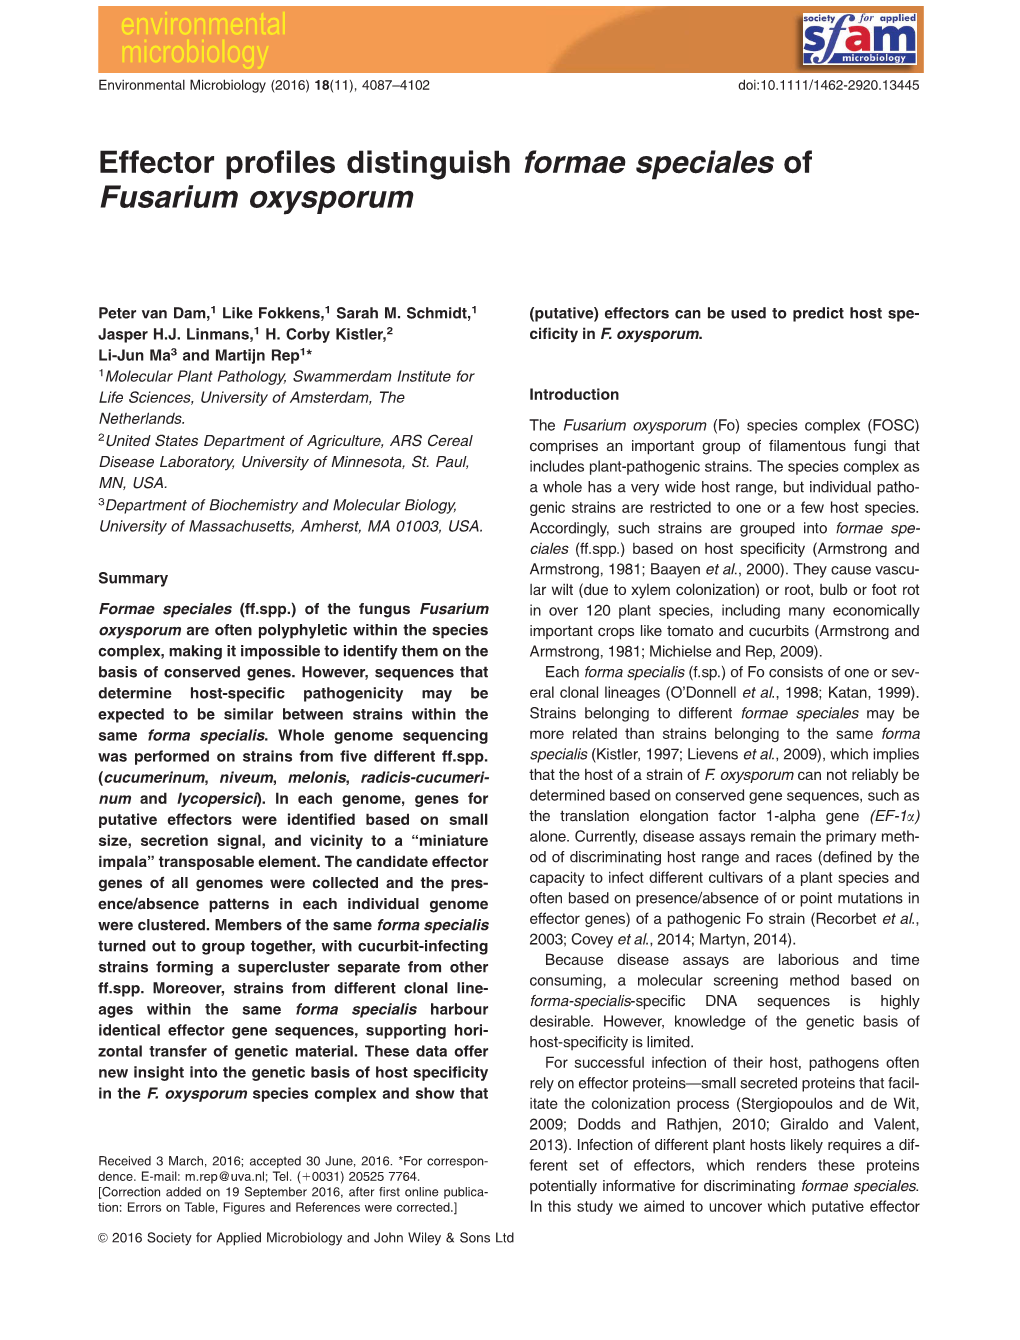 Effector Profiles Distinguish Formae Speciales of Fusarium Oxysporum